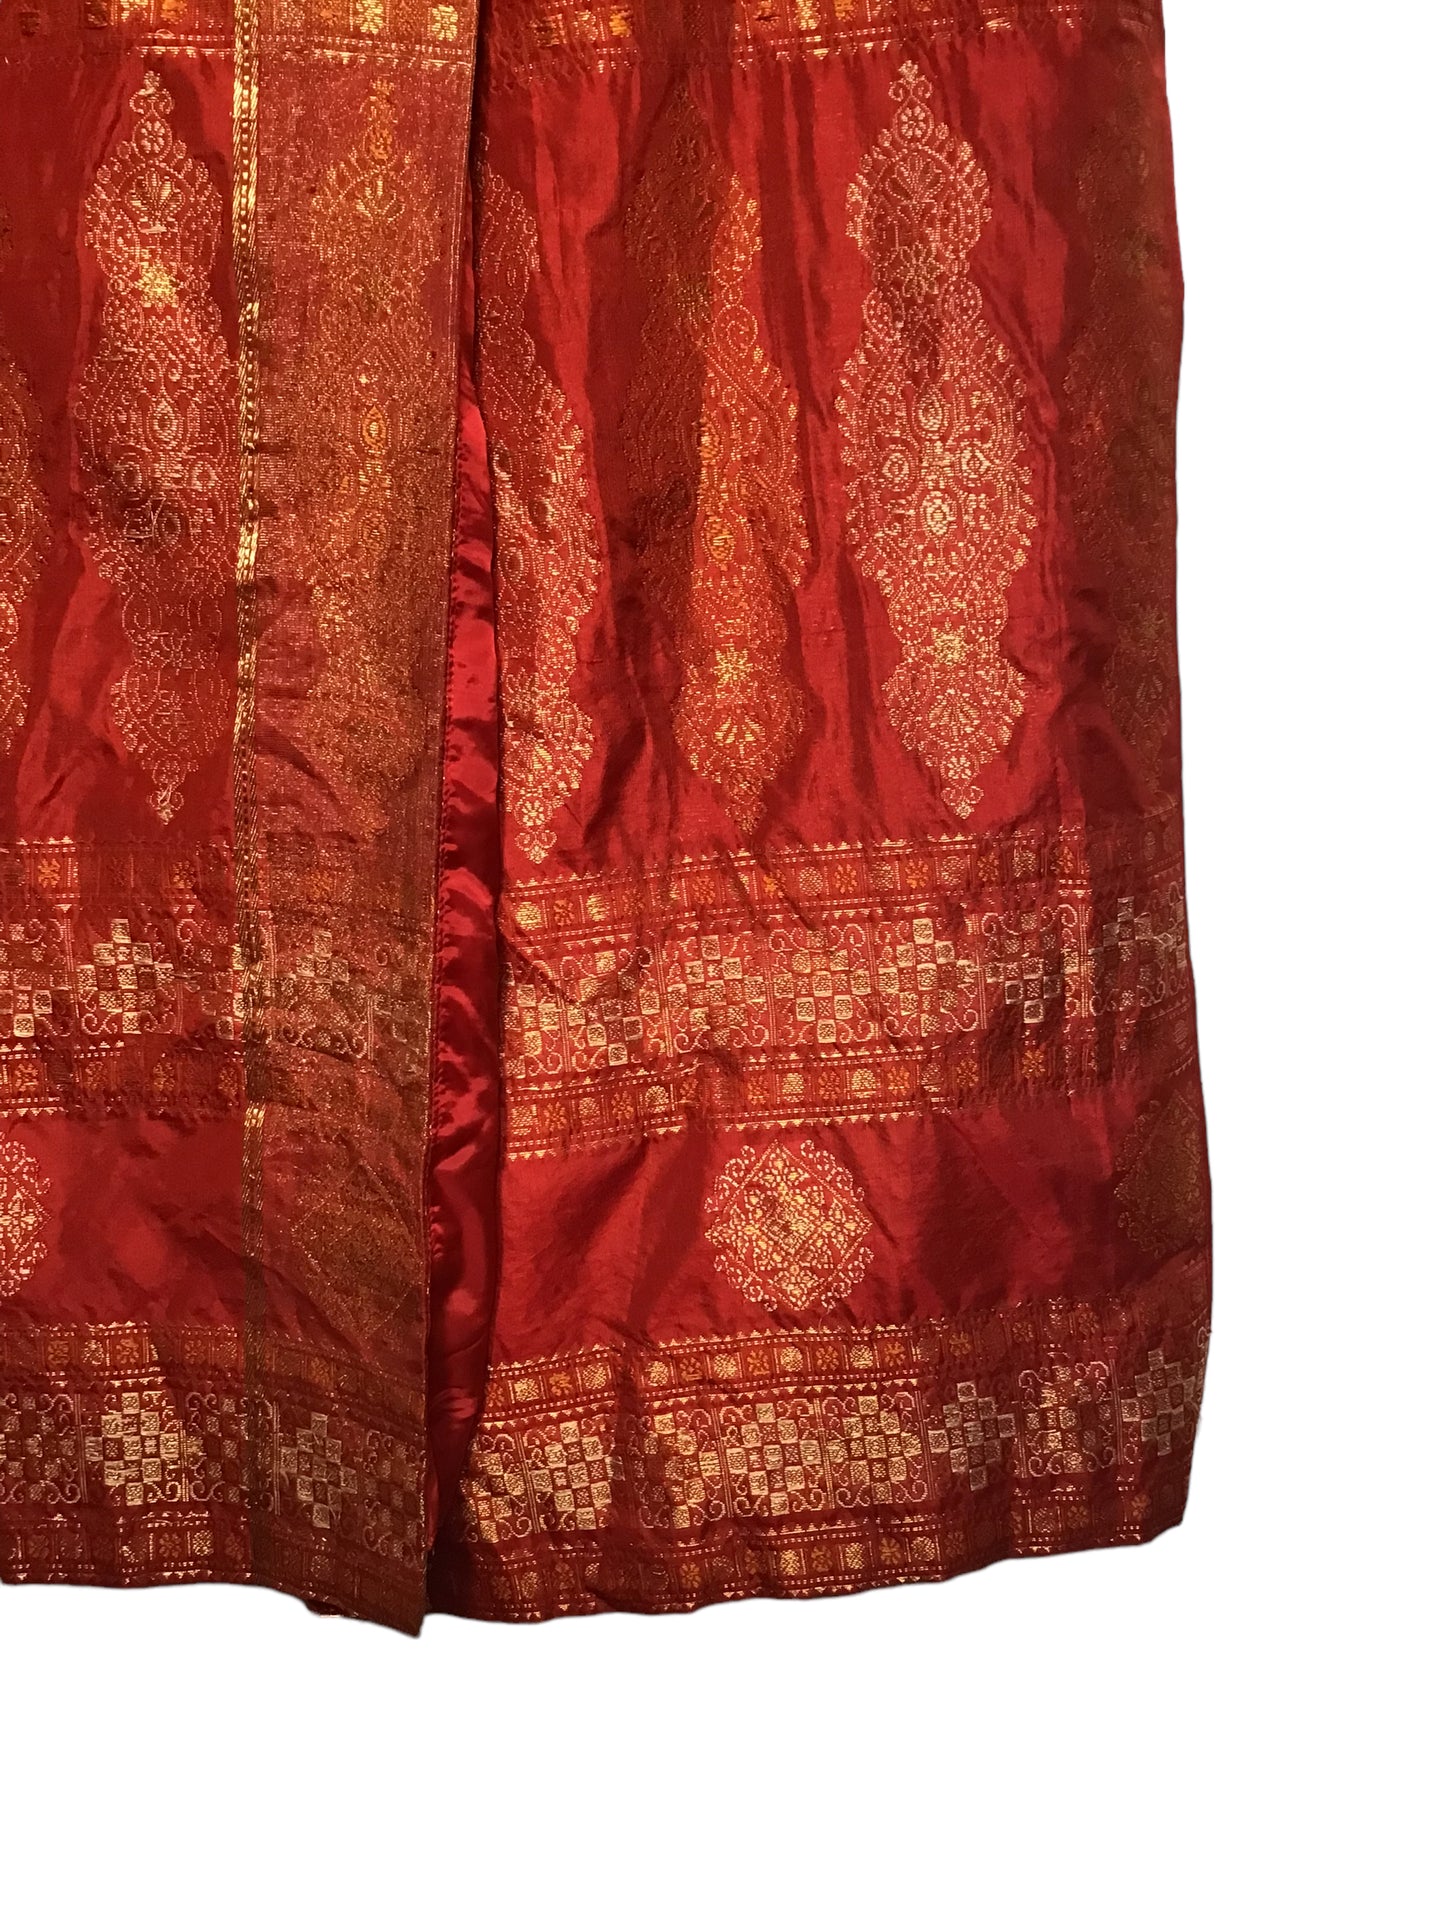 Indian Skirt (Size XXL)